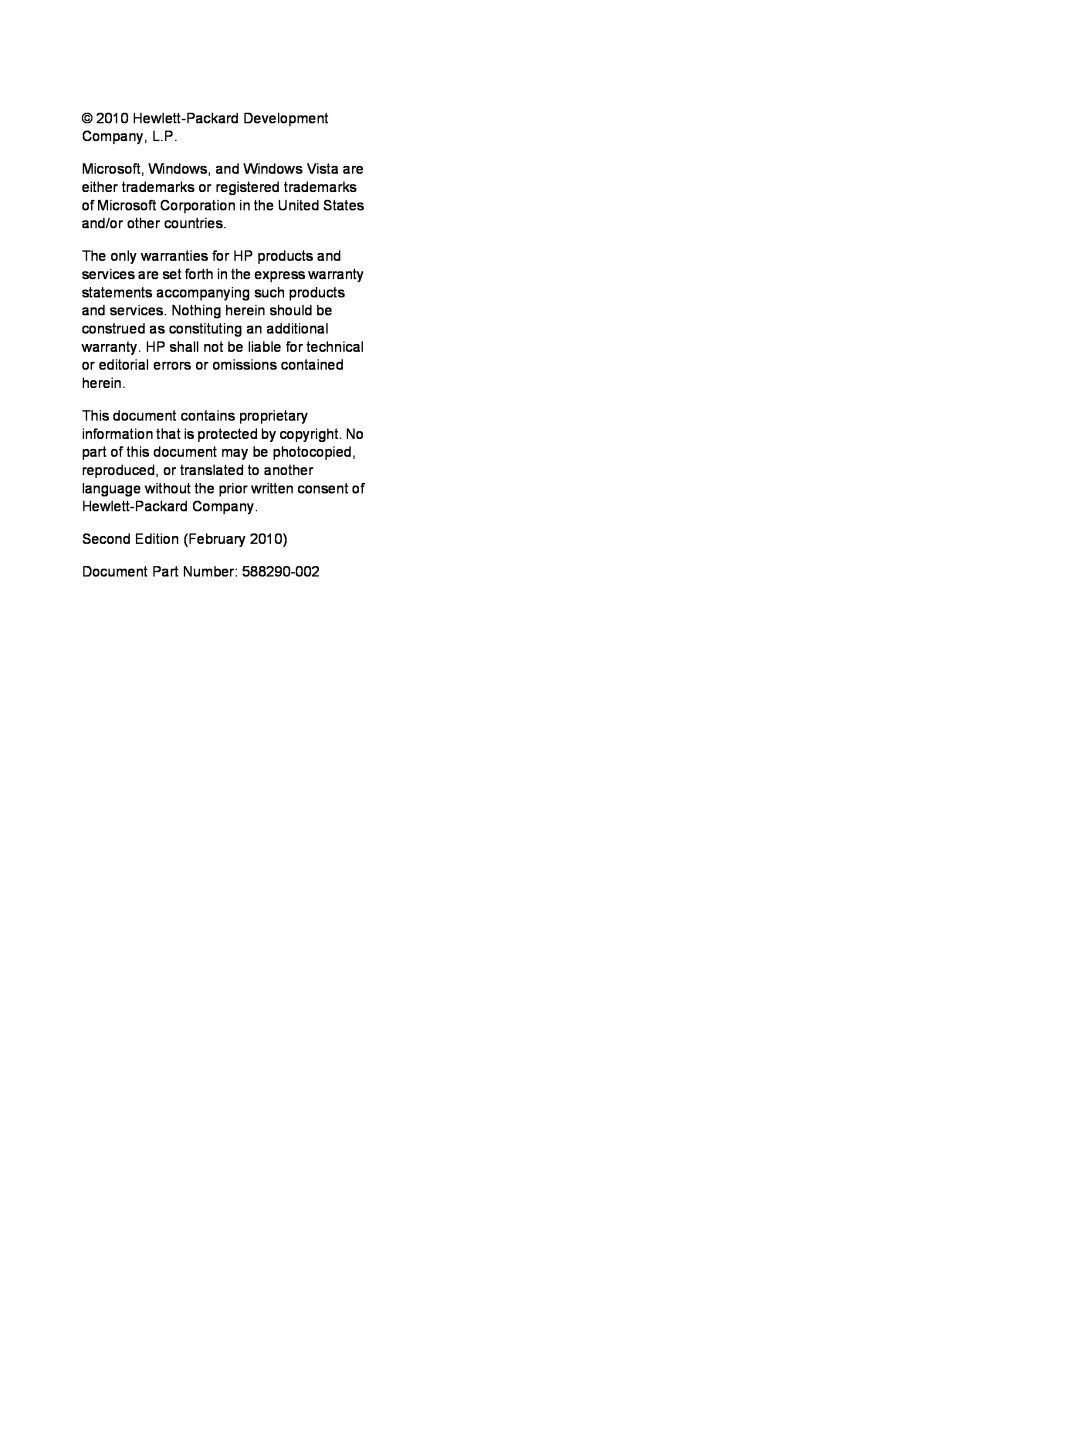 HP Q2210S, Q2010S, Q1910S manual Hewlett-Packard Development Company, L.P, Second Edition February Document Part Number 